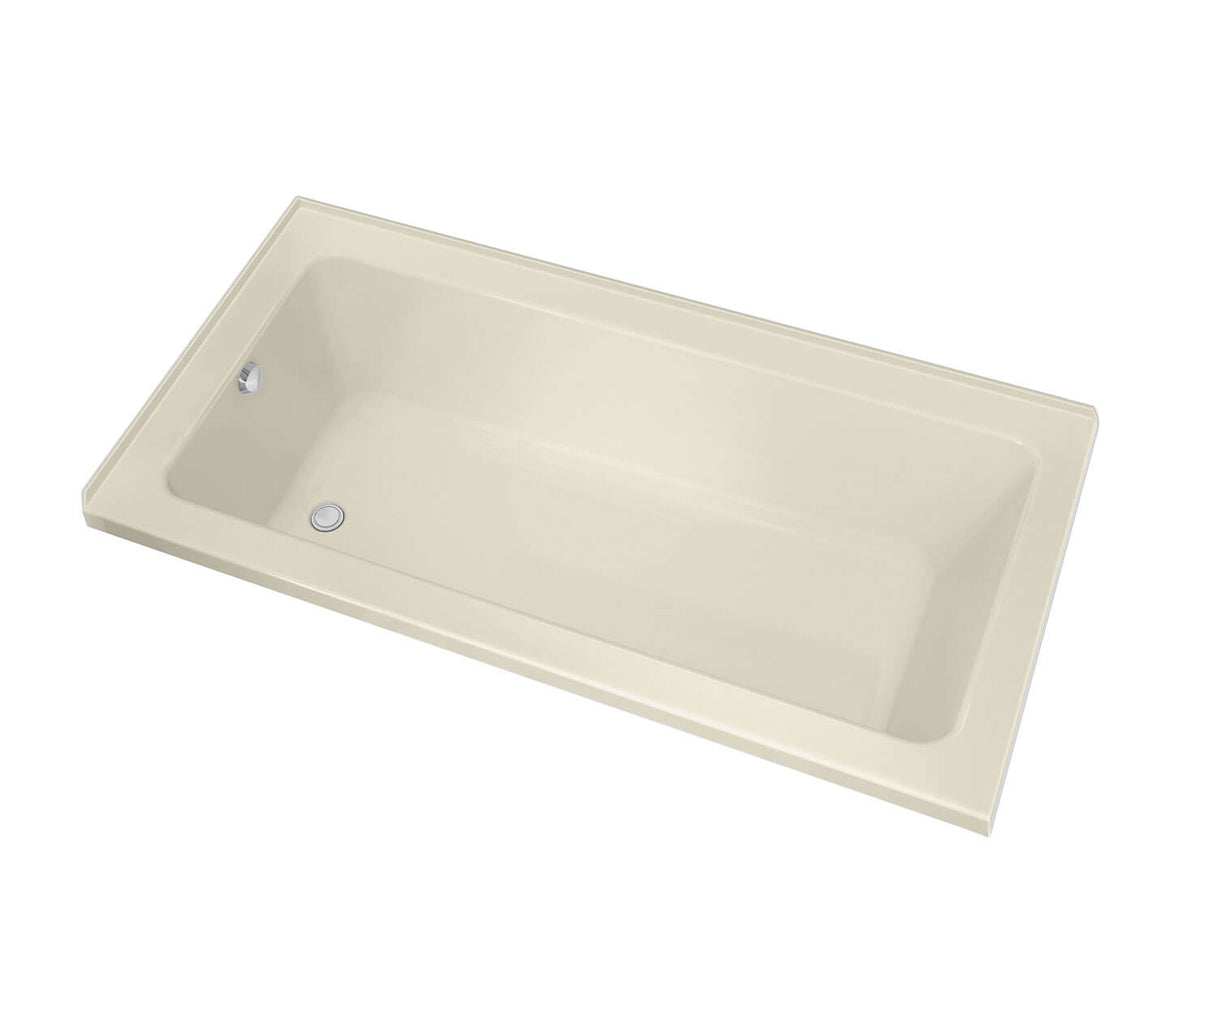 MAAX 106211-R-003-004 Pose 7236 IF Acrylic Corner Left Right-Hand Drain Whirlpool Bathtub in Bone